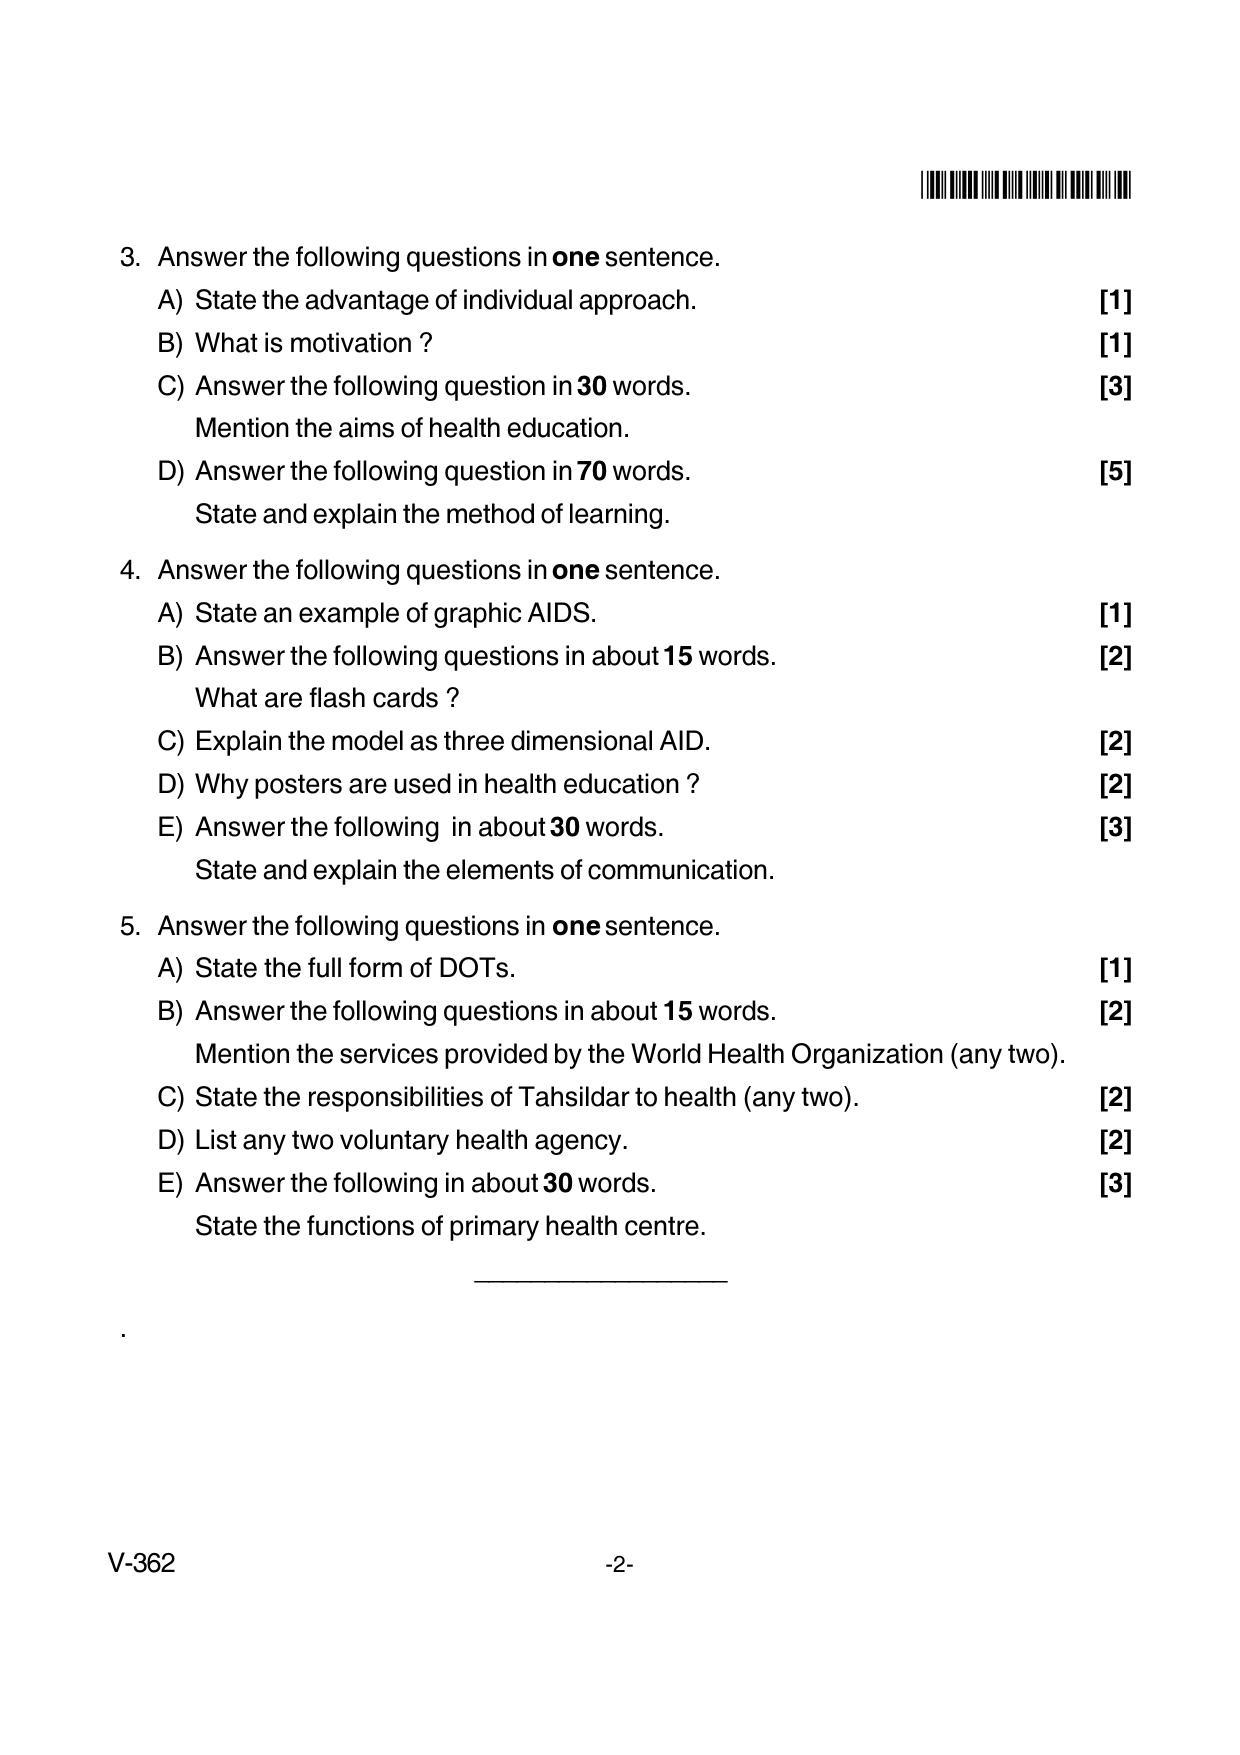 Goa Board Class 12 Community Health Nursing - II  Voc 362 (June 2018) Question Paper - Page 2